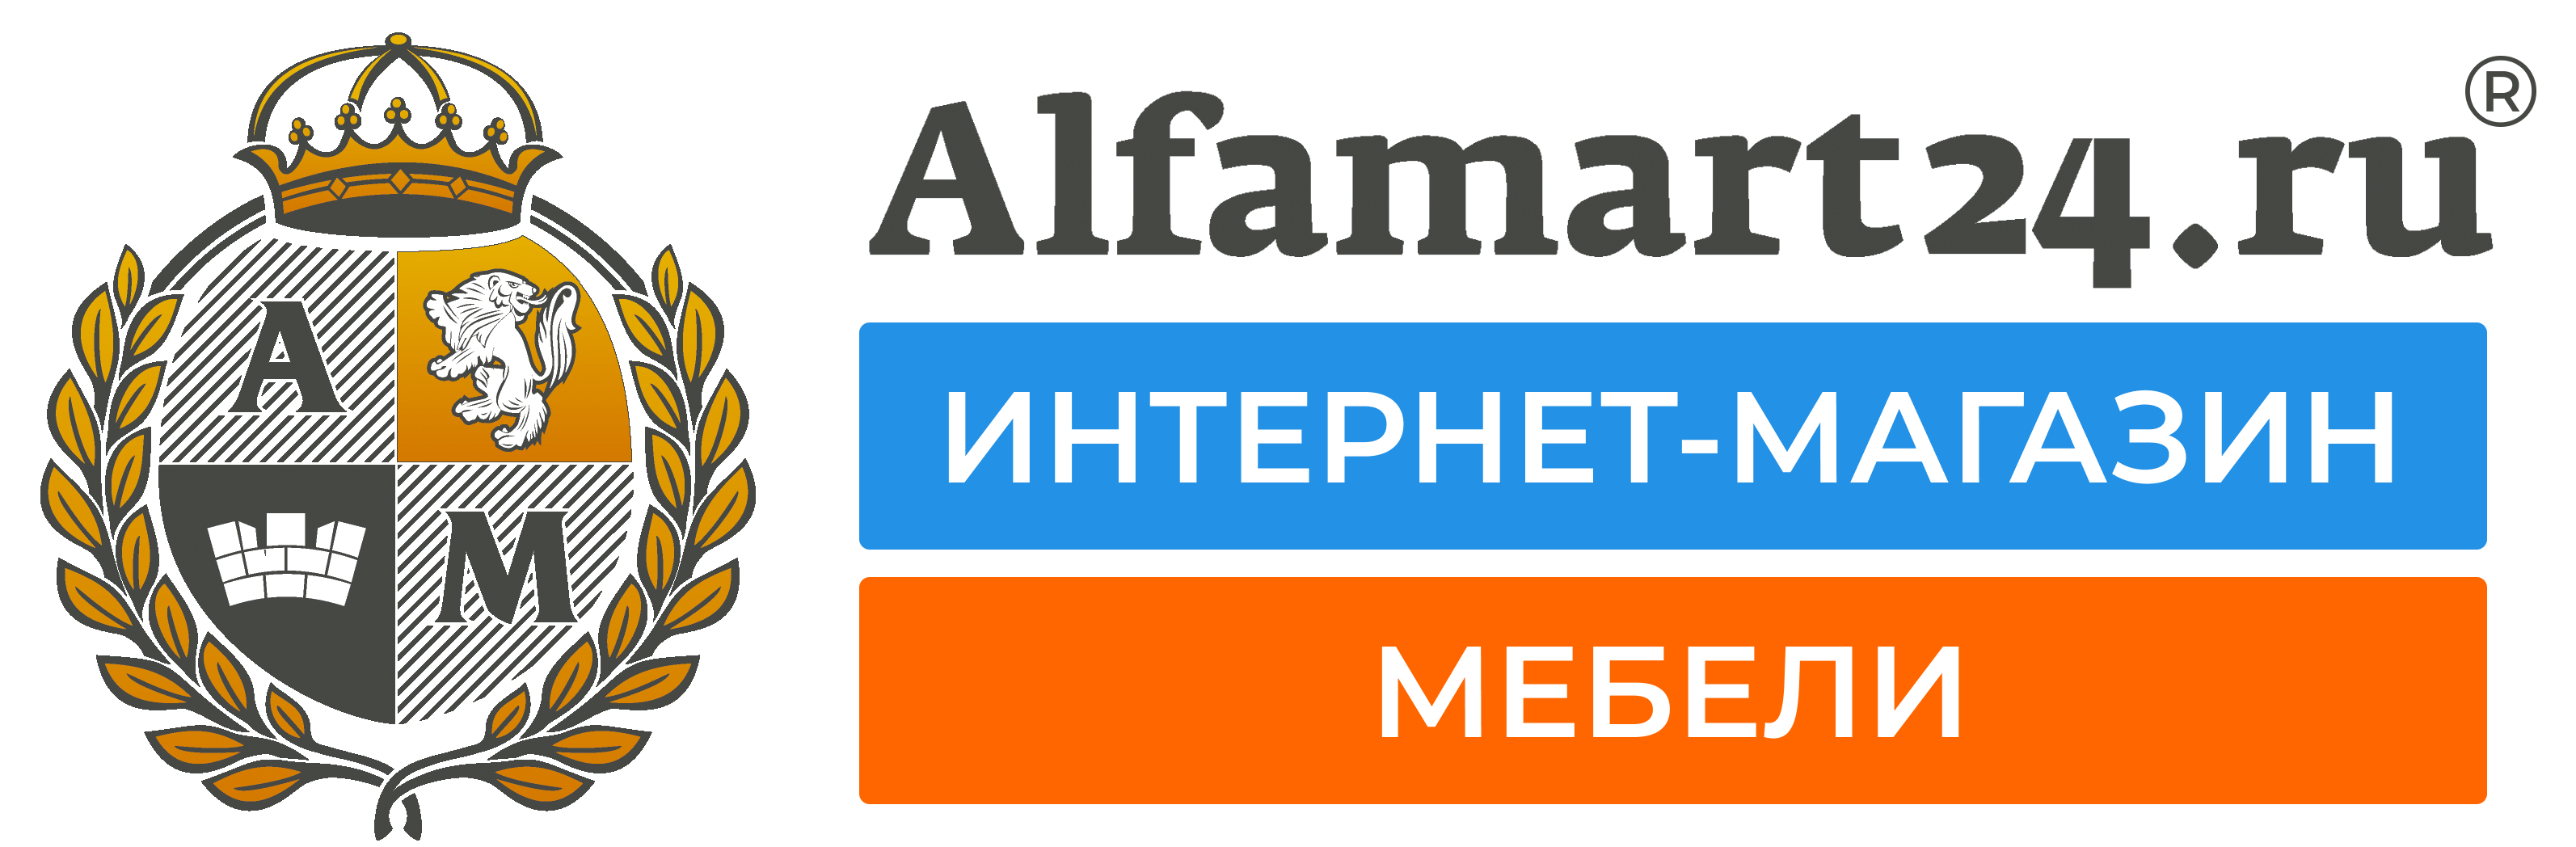 Alfamart24.ru - ИНТЕРНЕТ-МАГАЗИН МЕБЕЛИ